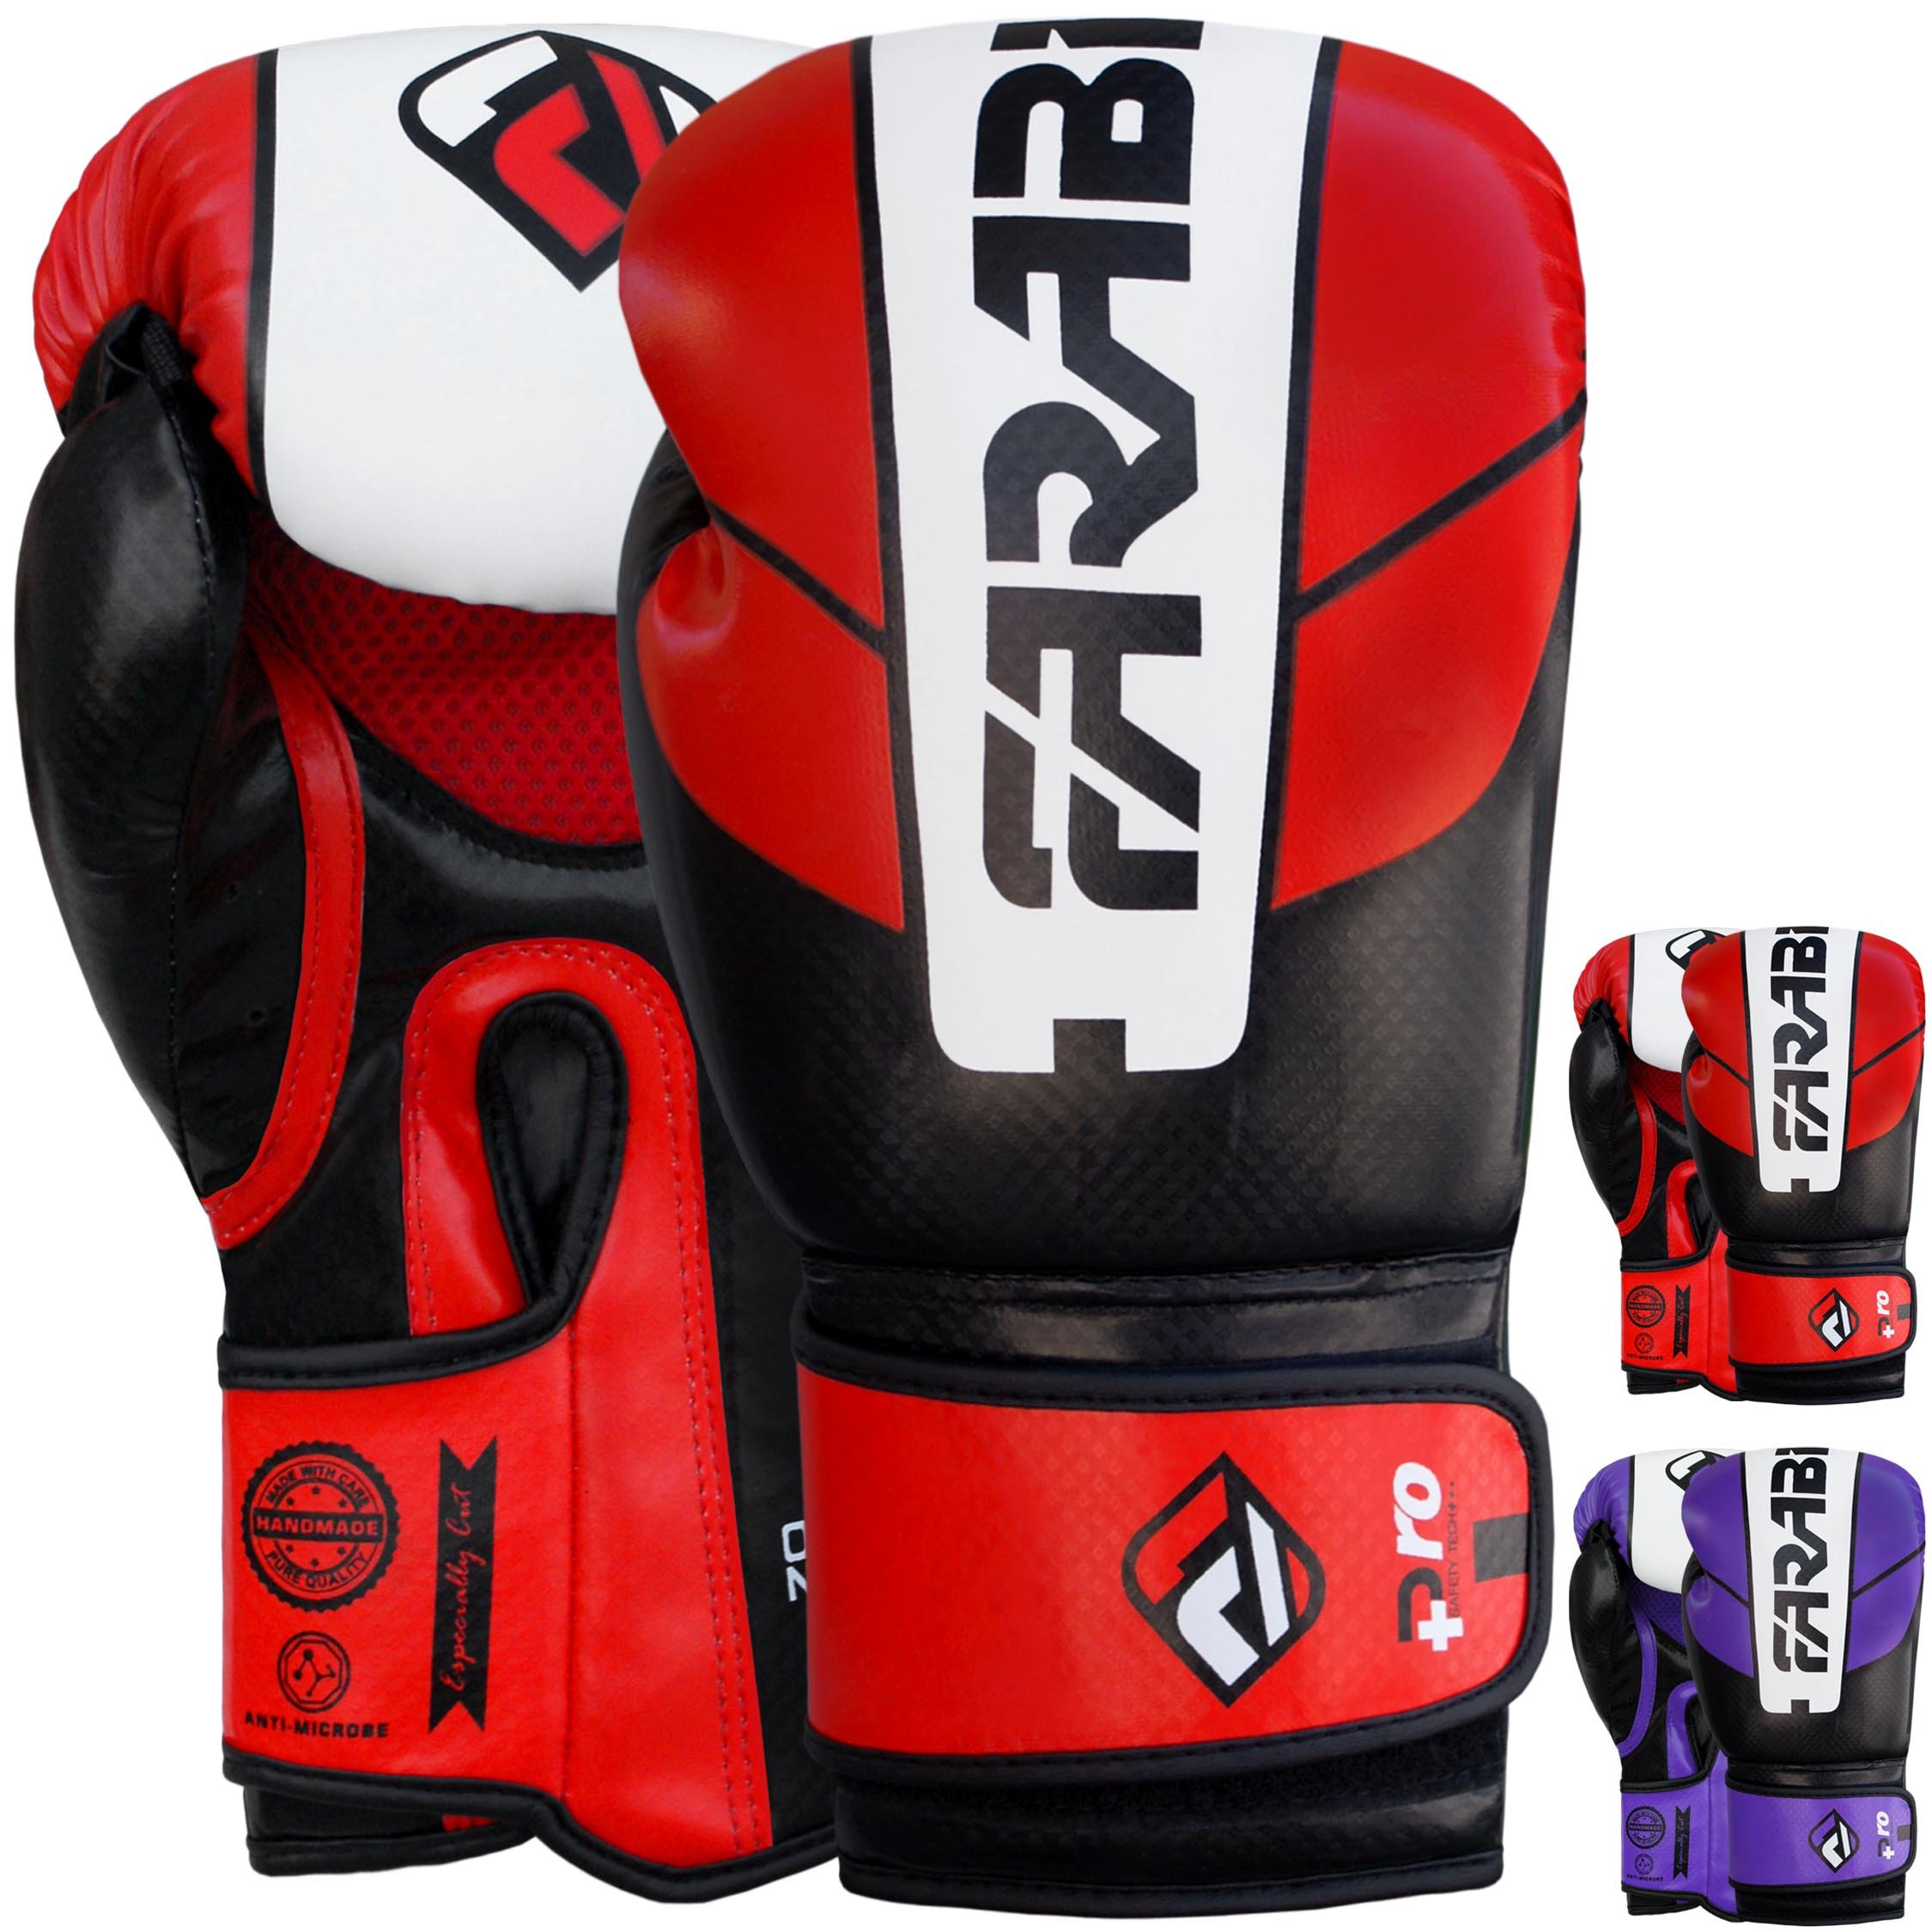 Farabi Boxing Gloves for Training Punching Sparring (Red/Black, 16-oz)